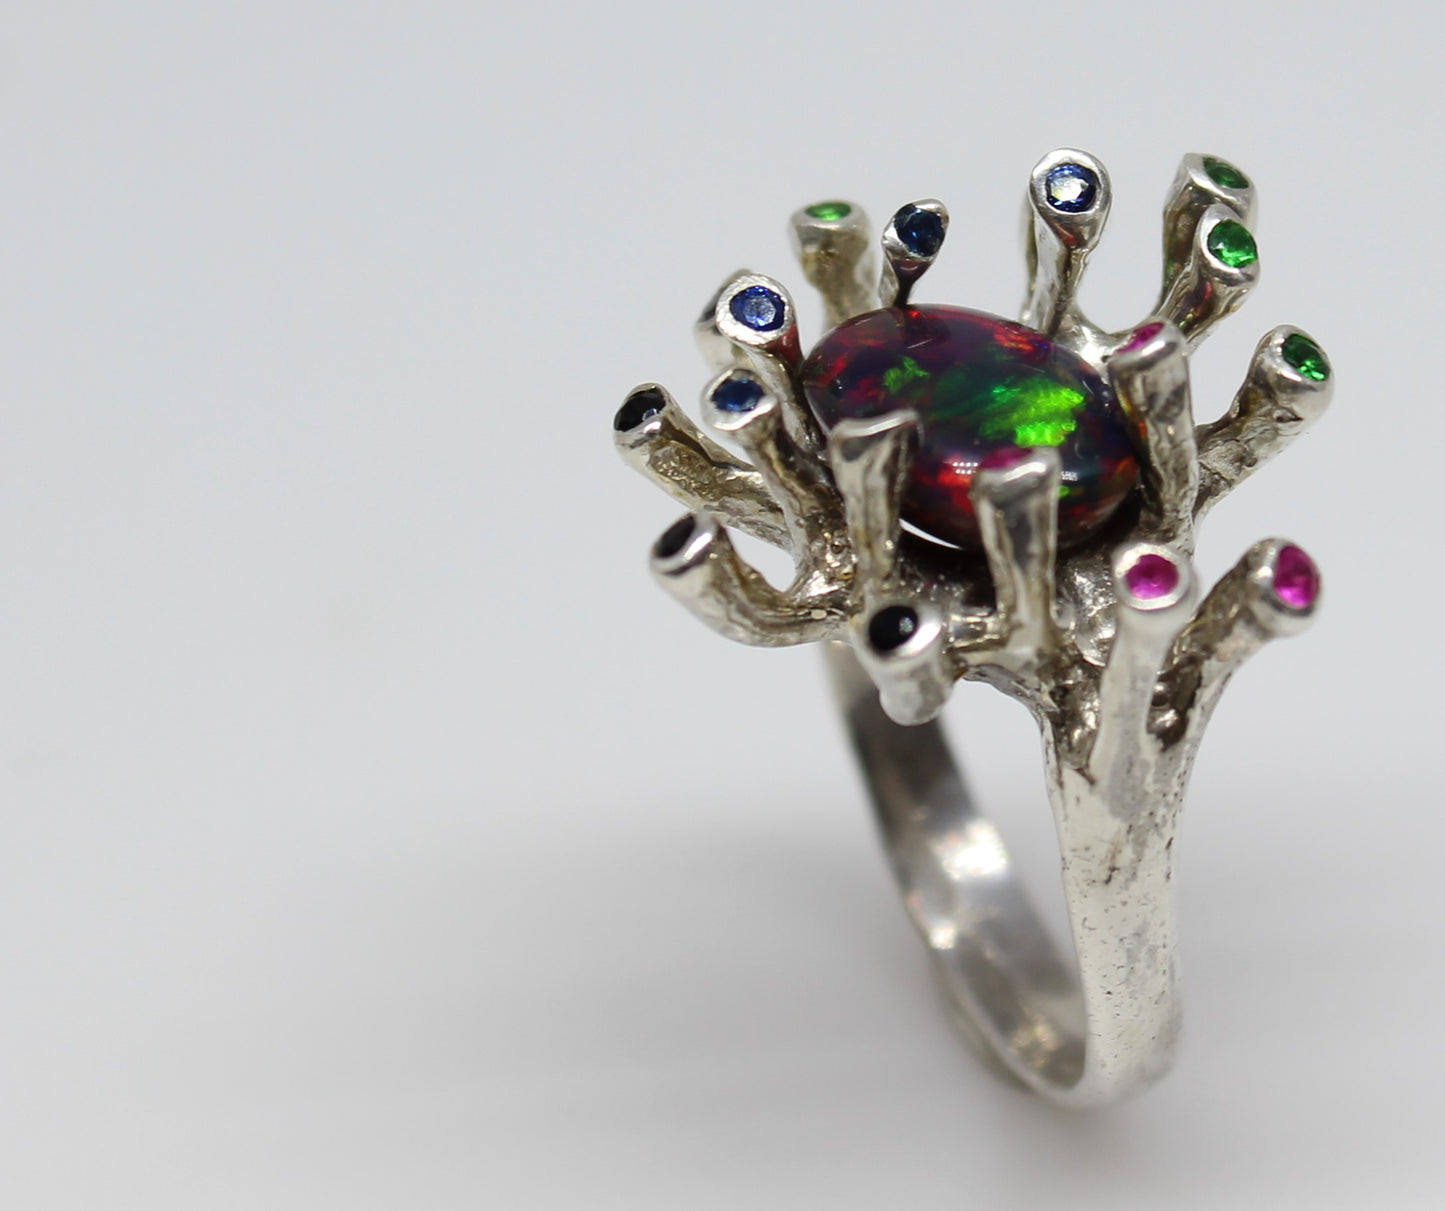 Black Opal & Gemstones Sterling Silver Ring - Handmade Jewelry #218